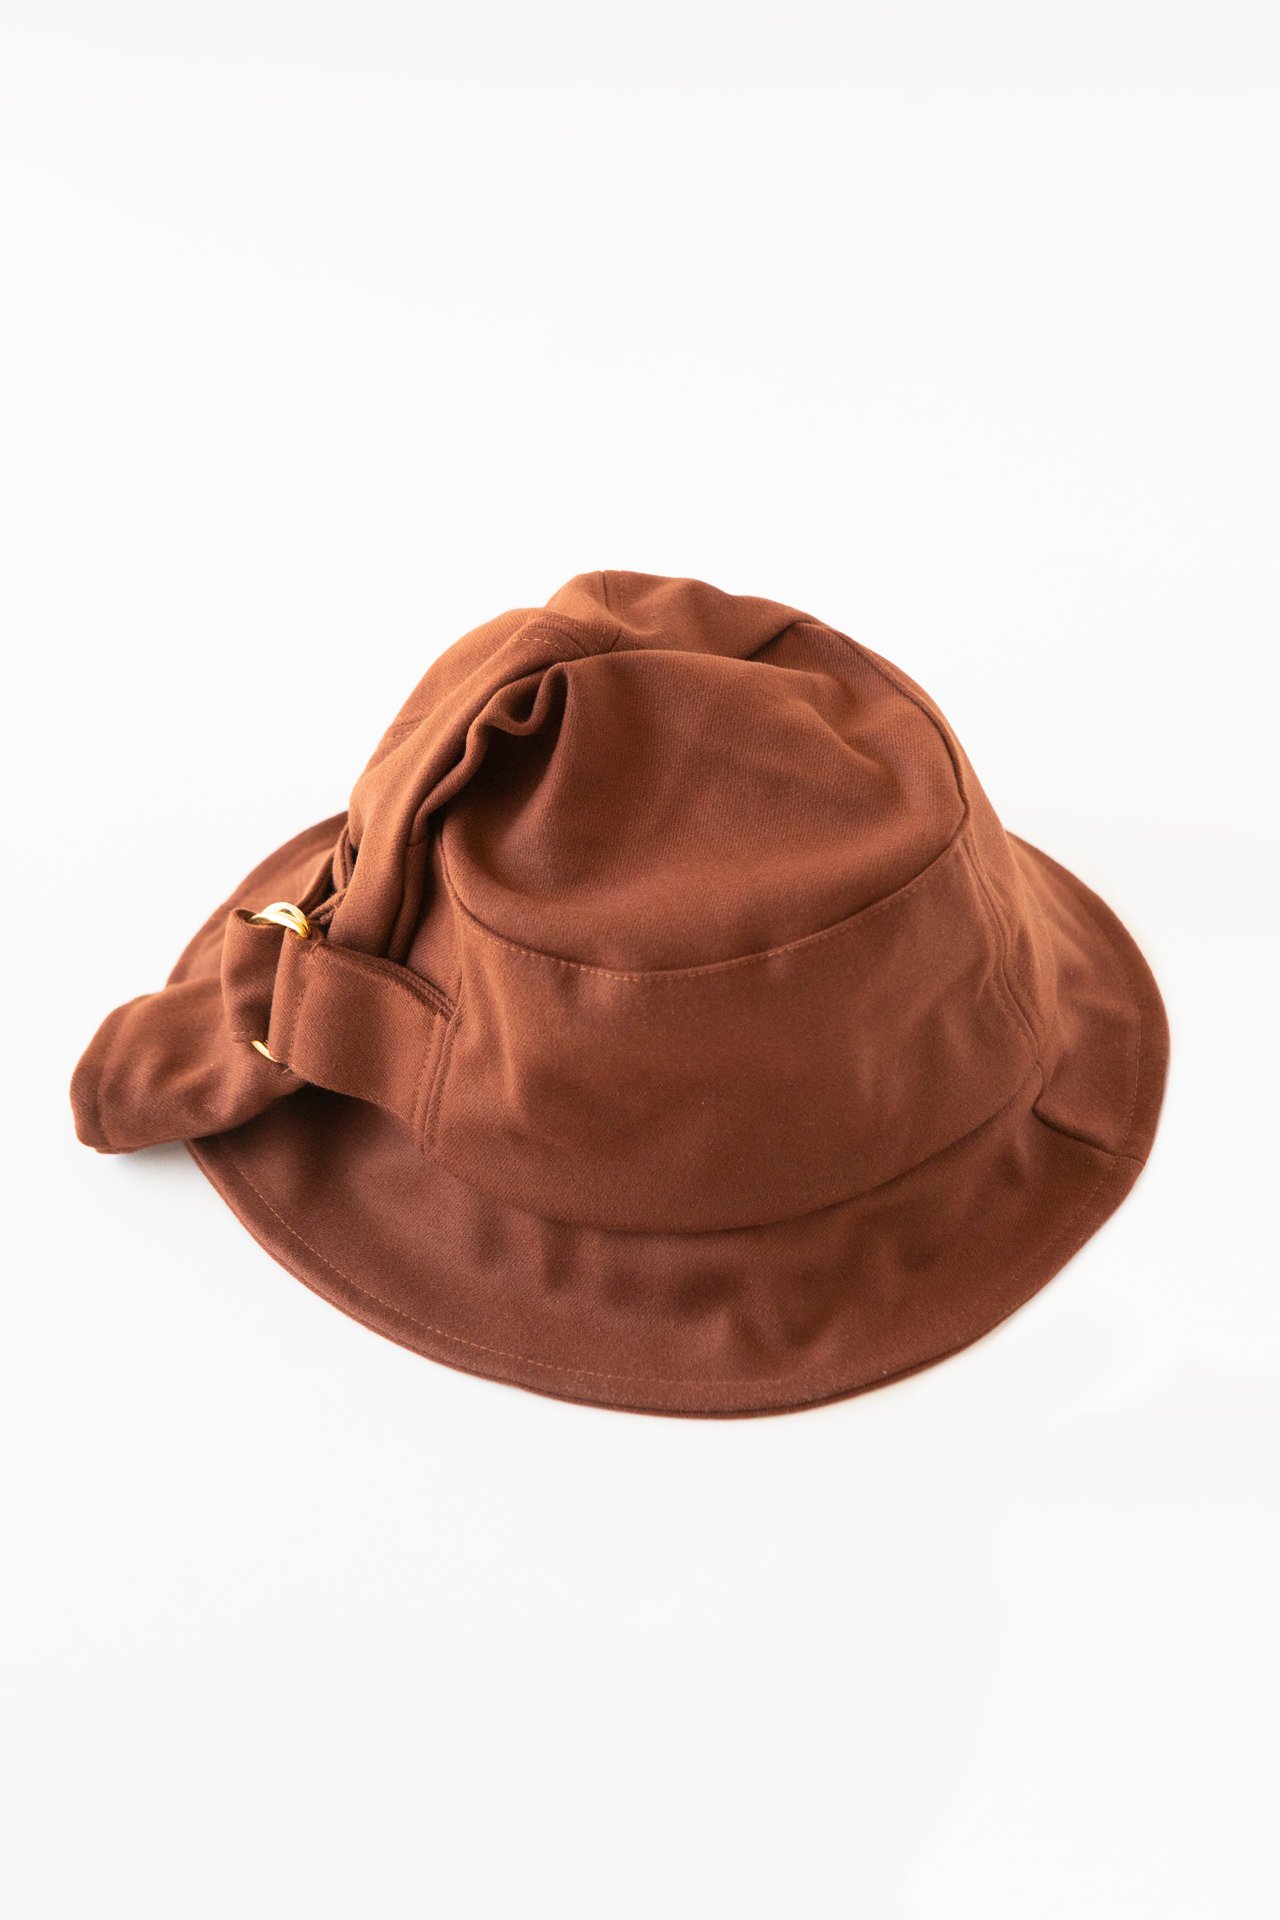 Gold Buckle Hat | Rust - ANTLER NZ